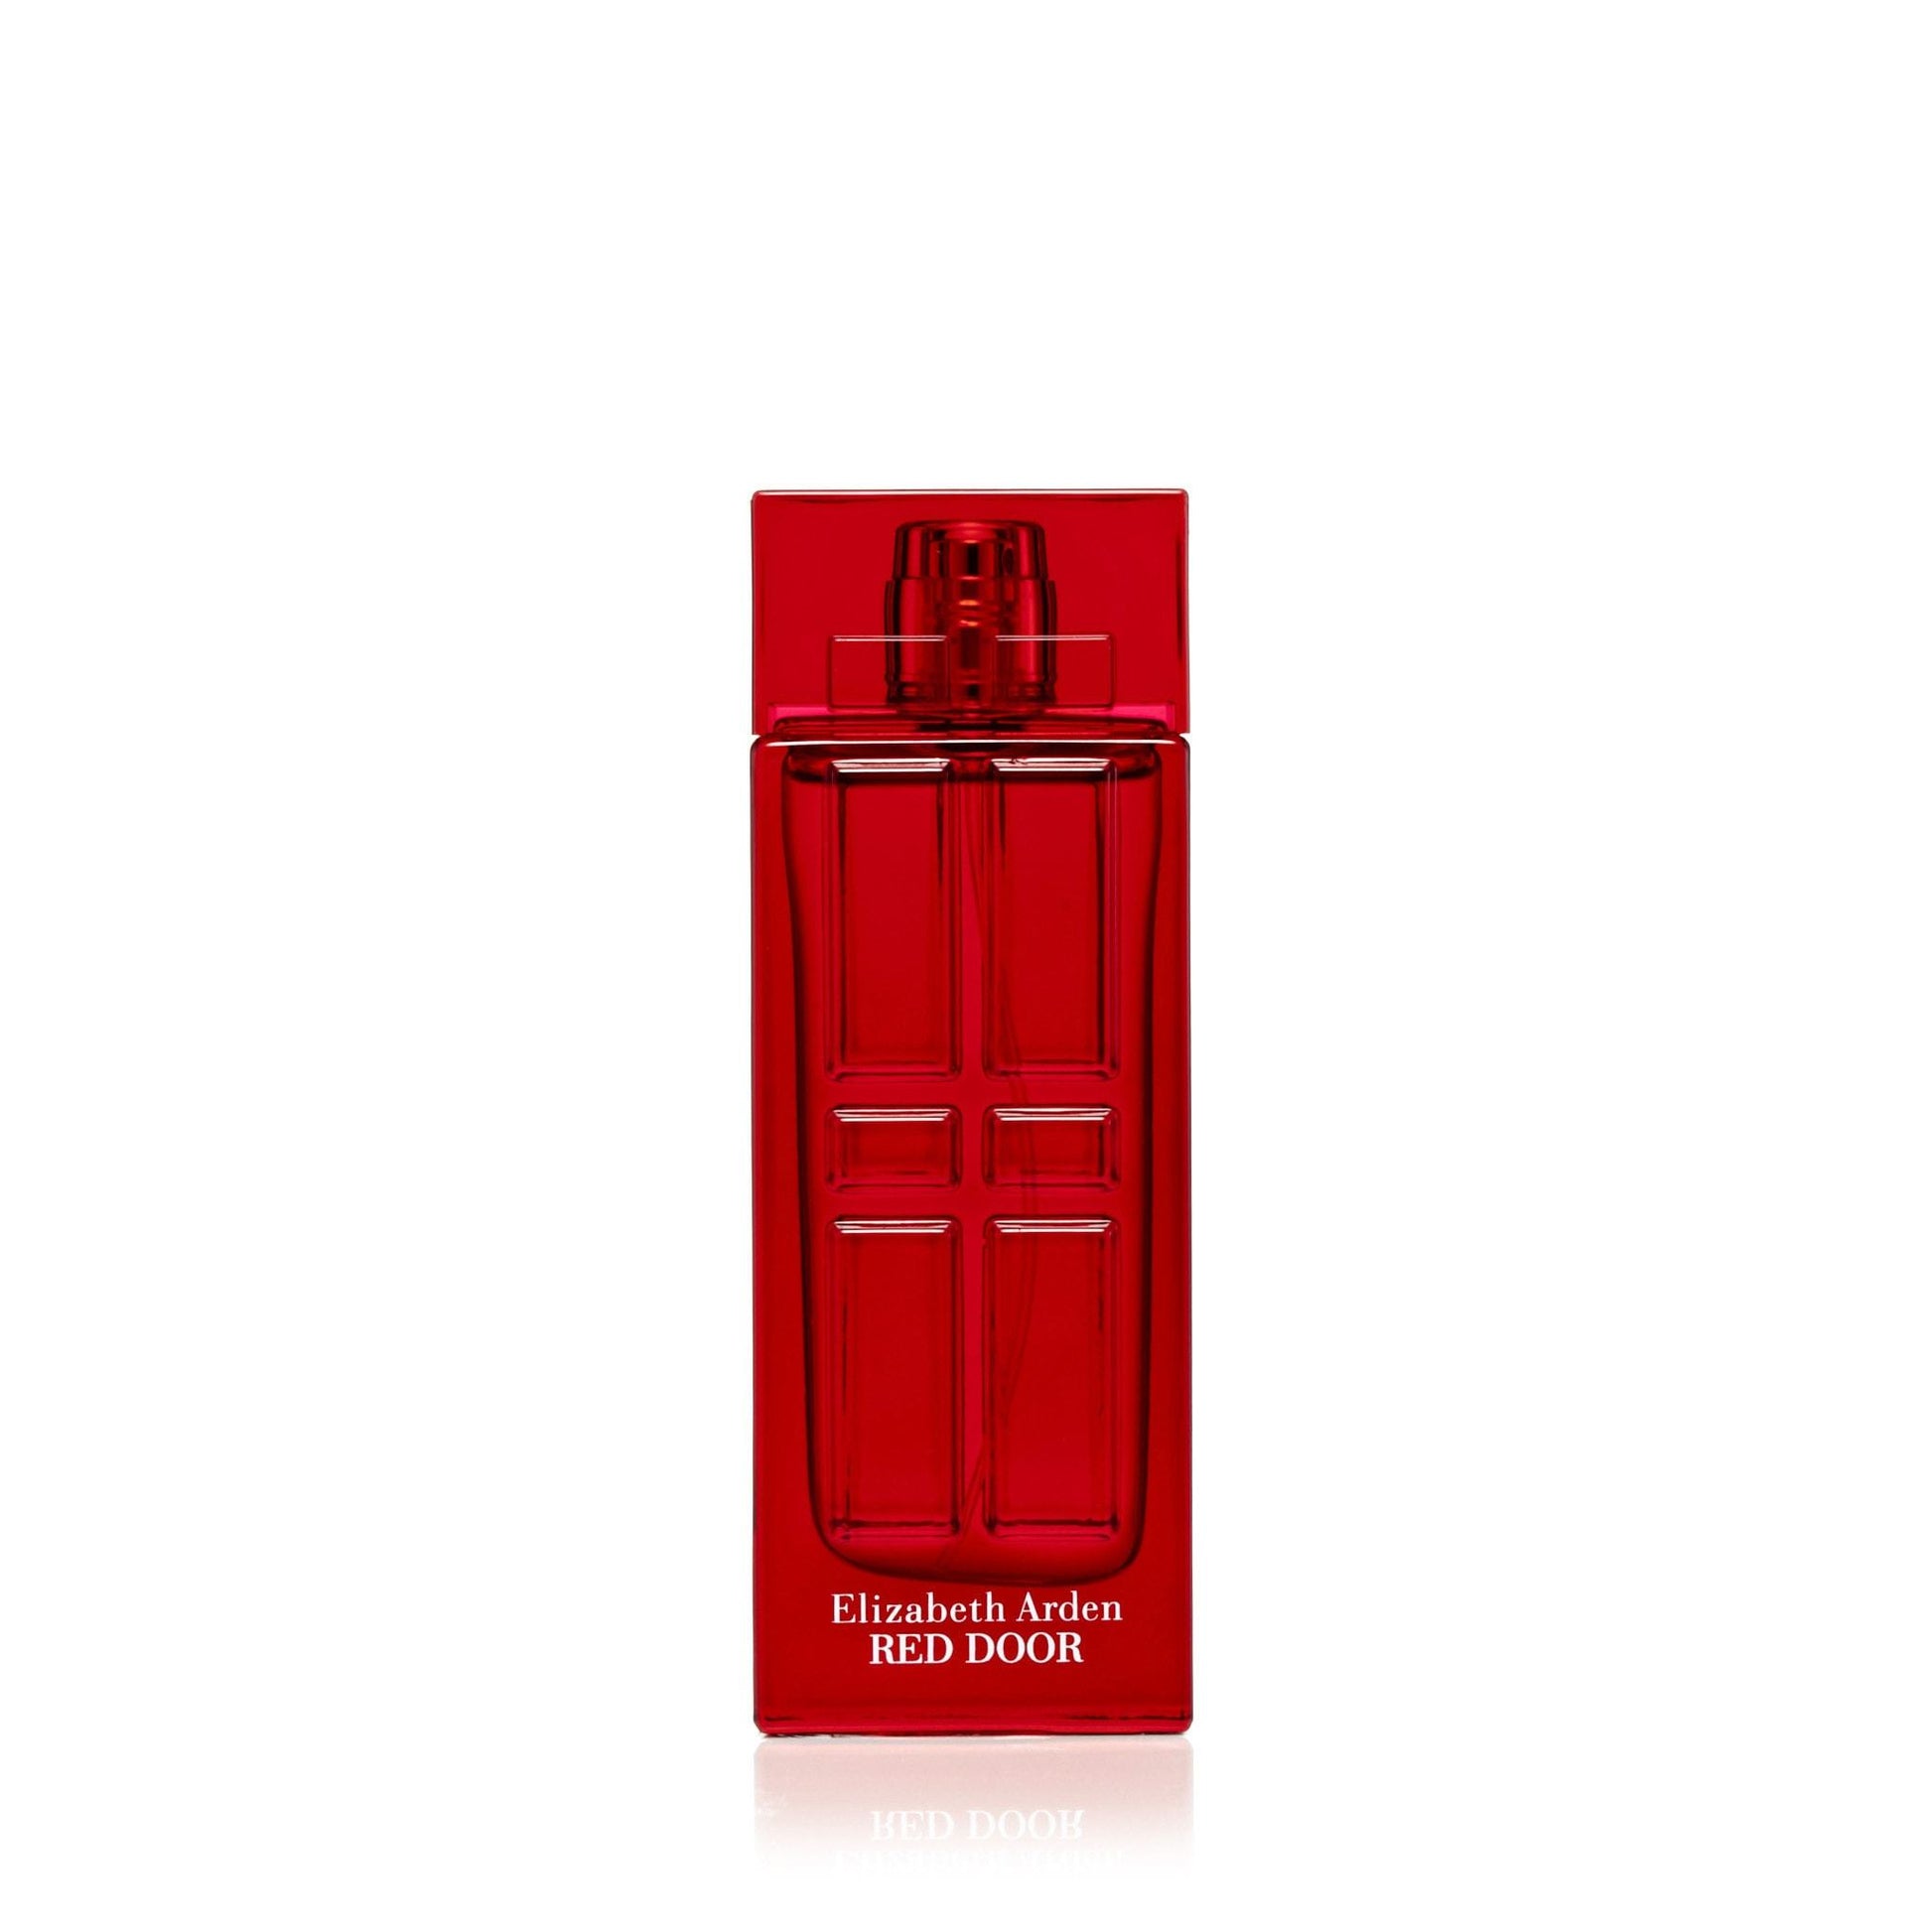 Red Door Eau de Toilette Spray for Women by Elizabeth Arden, Product image 4